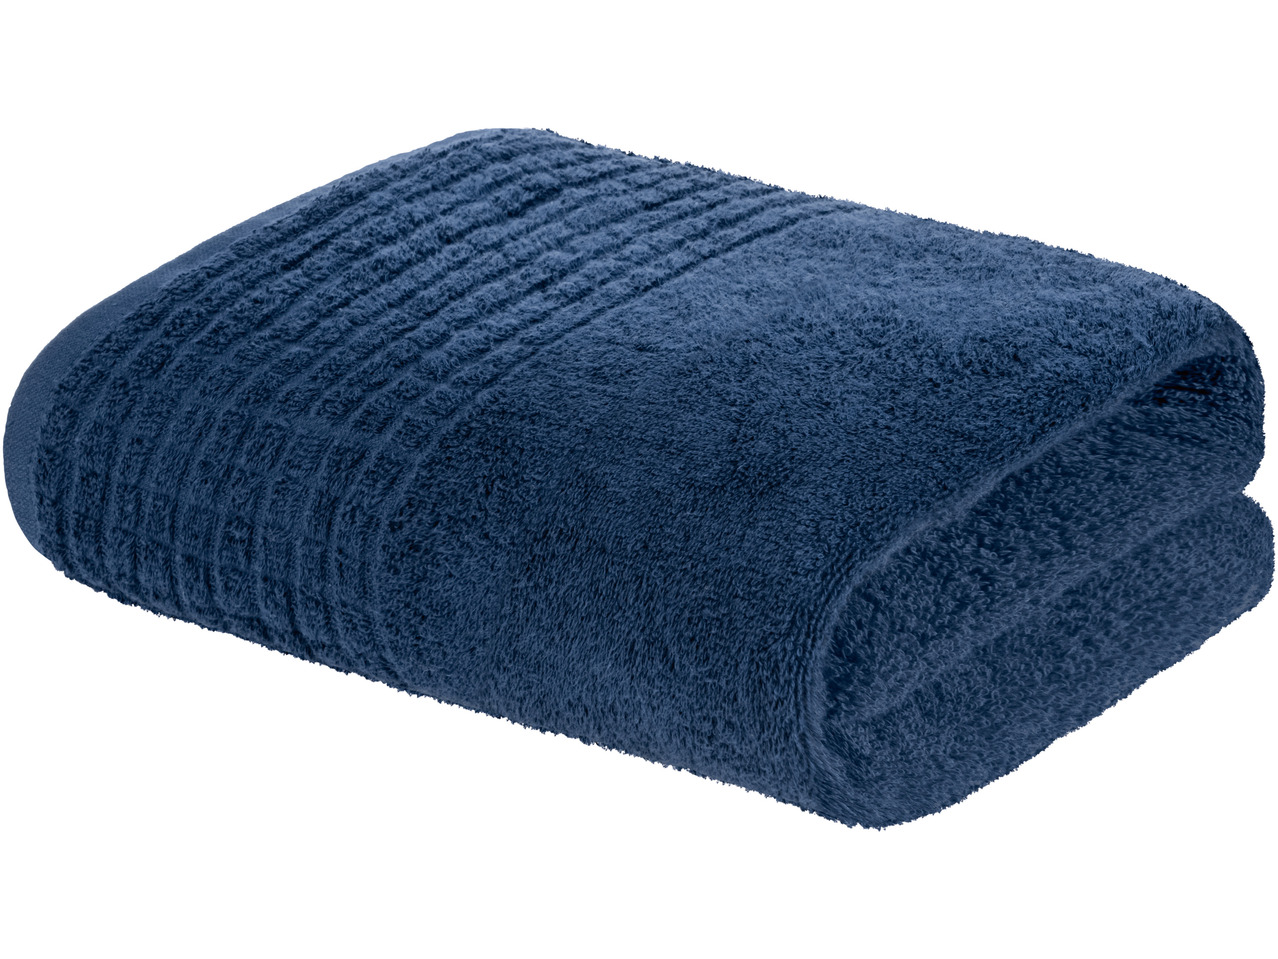 LIVARNO HOME® Ręcznik frotté 70 x 140 cm , cena 19 PLN 
LIVARNO HOME® Ręcznik ...